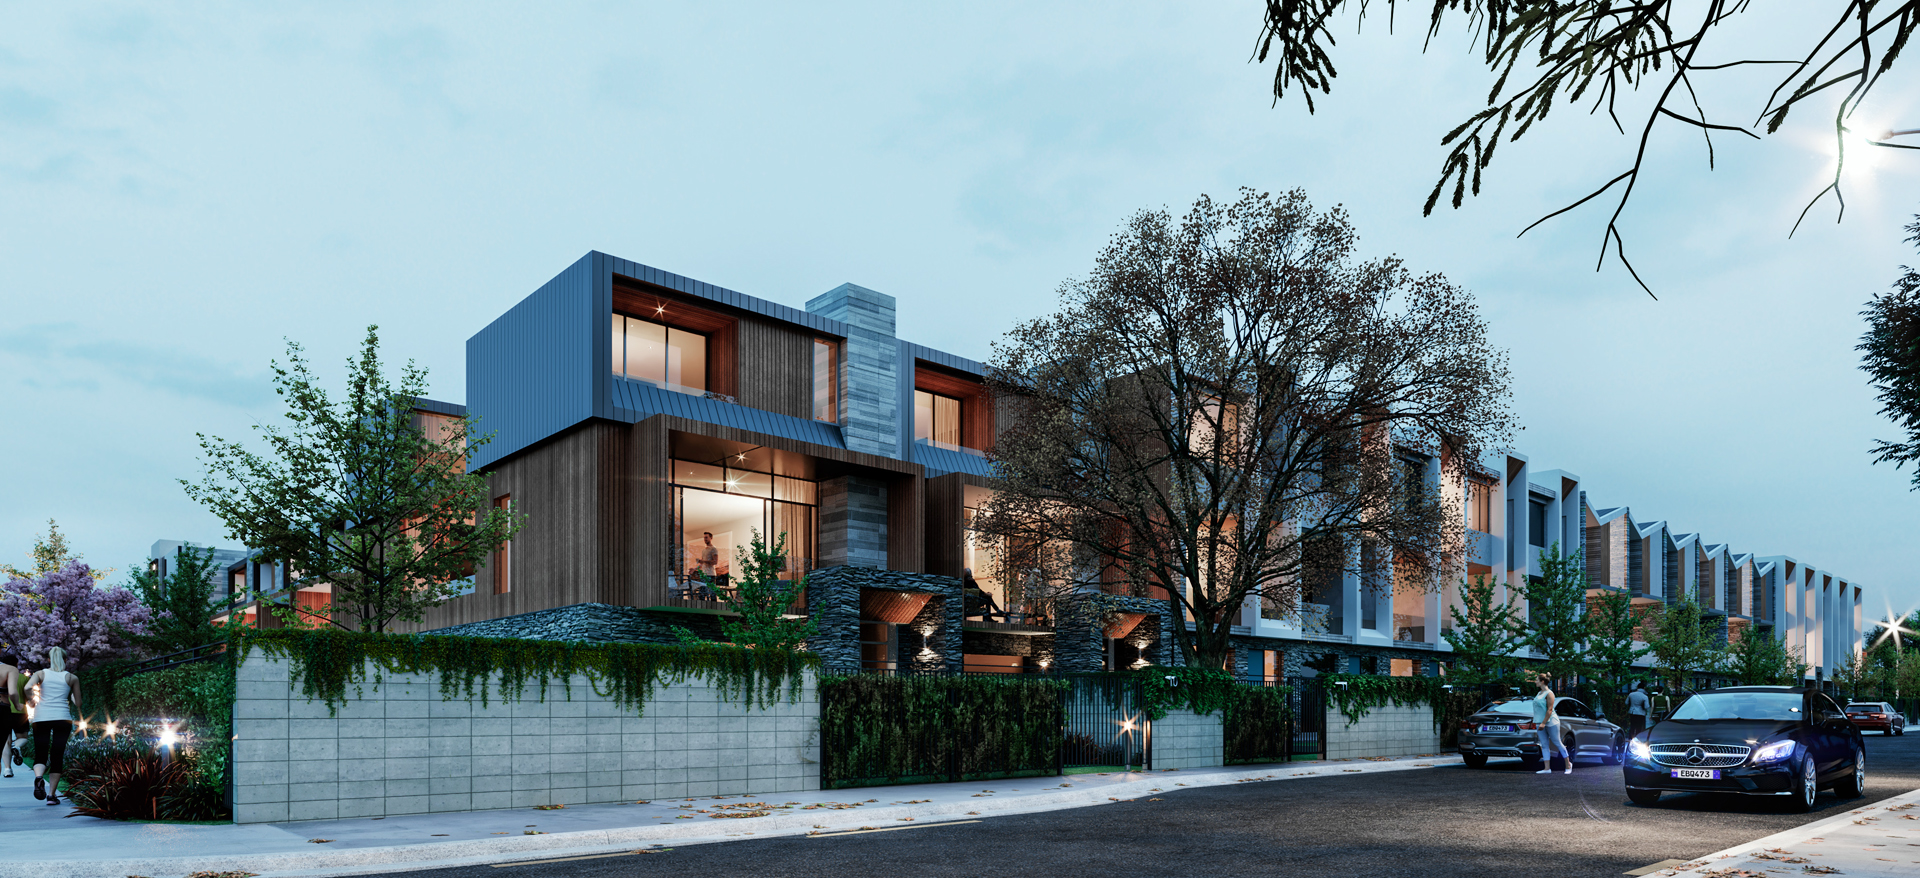 Merivale Terrace House Development